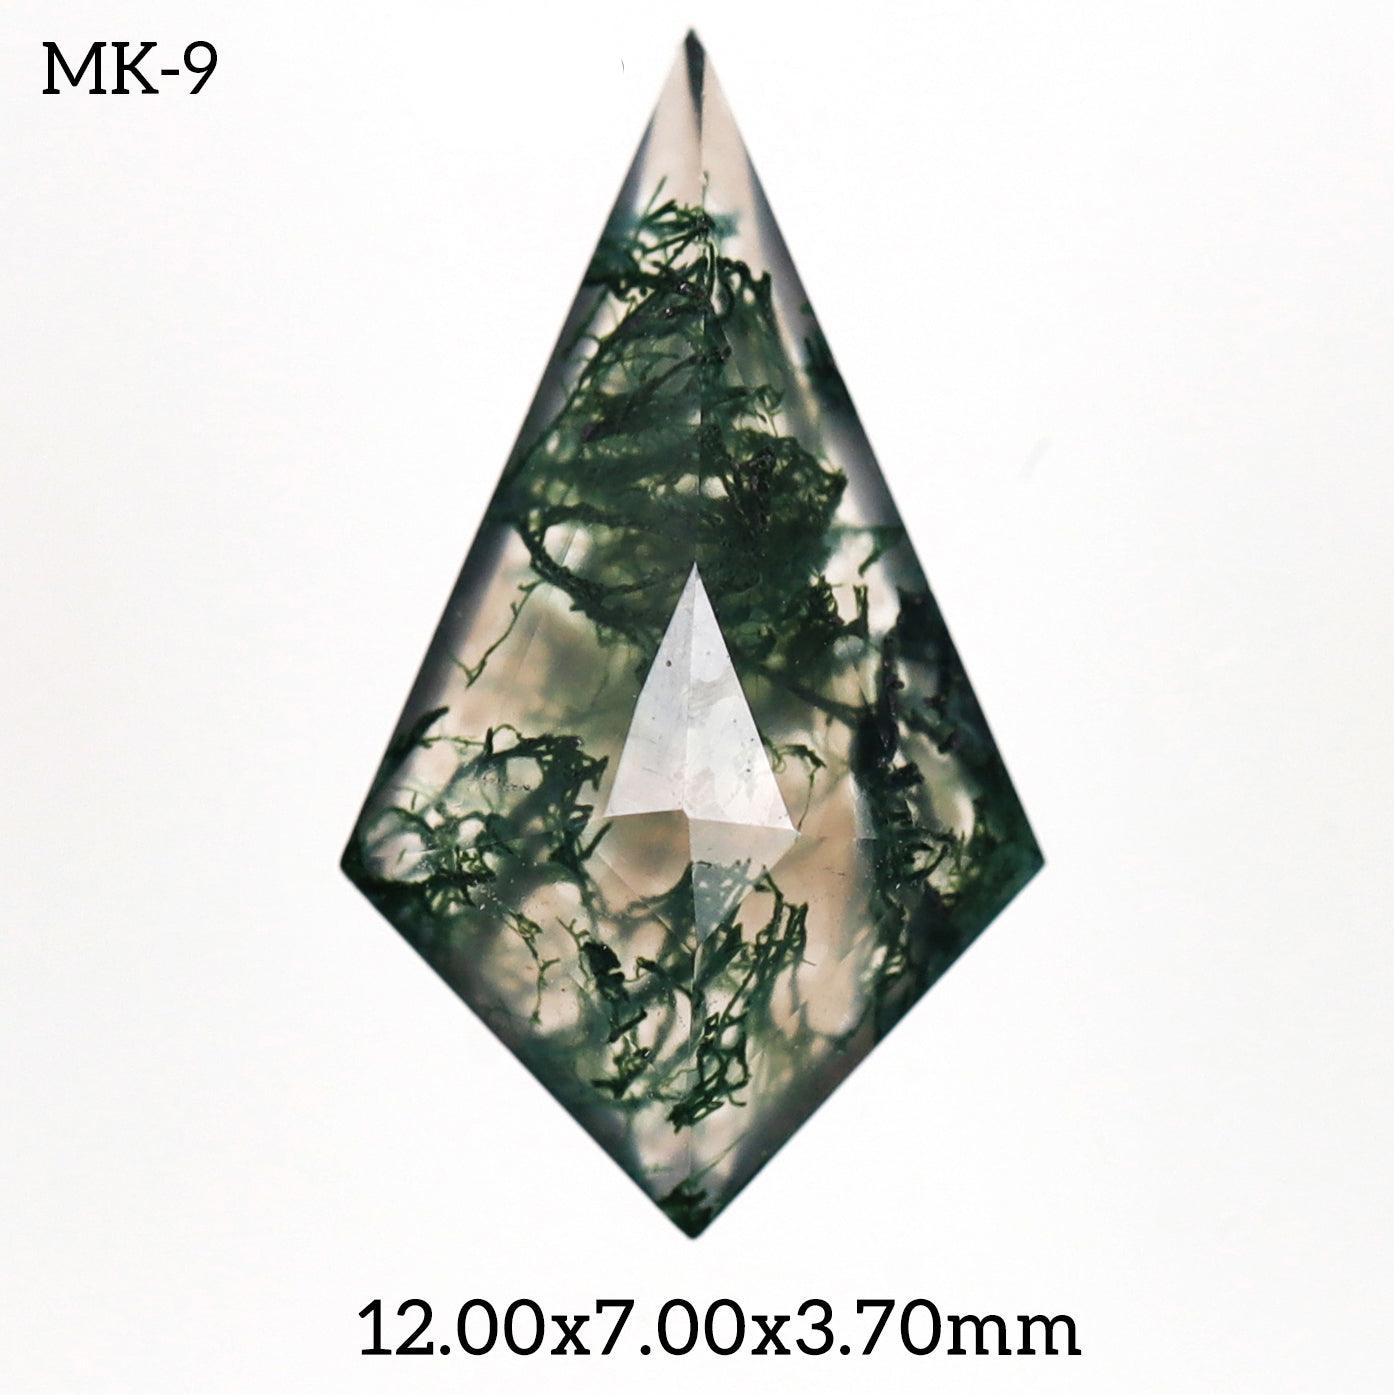 MK - 9 Moss Agate Kite Gemstone